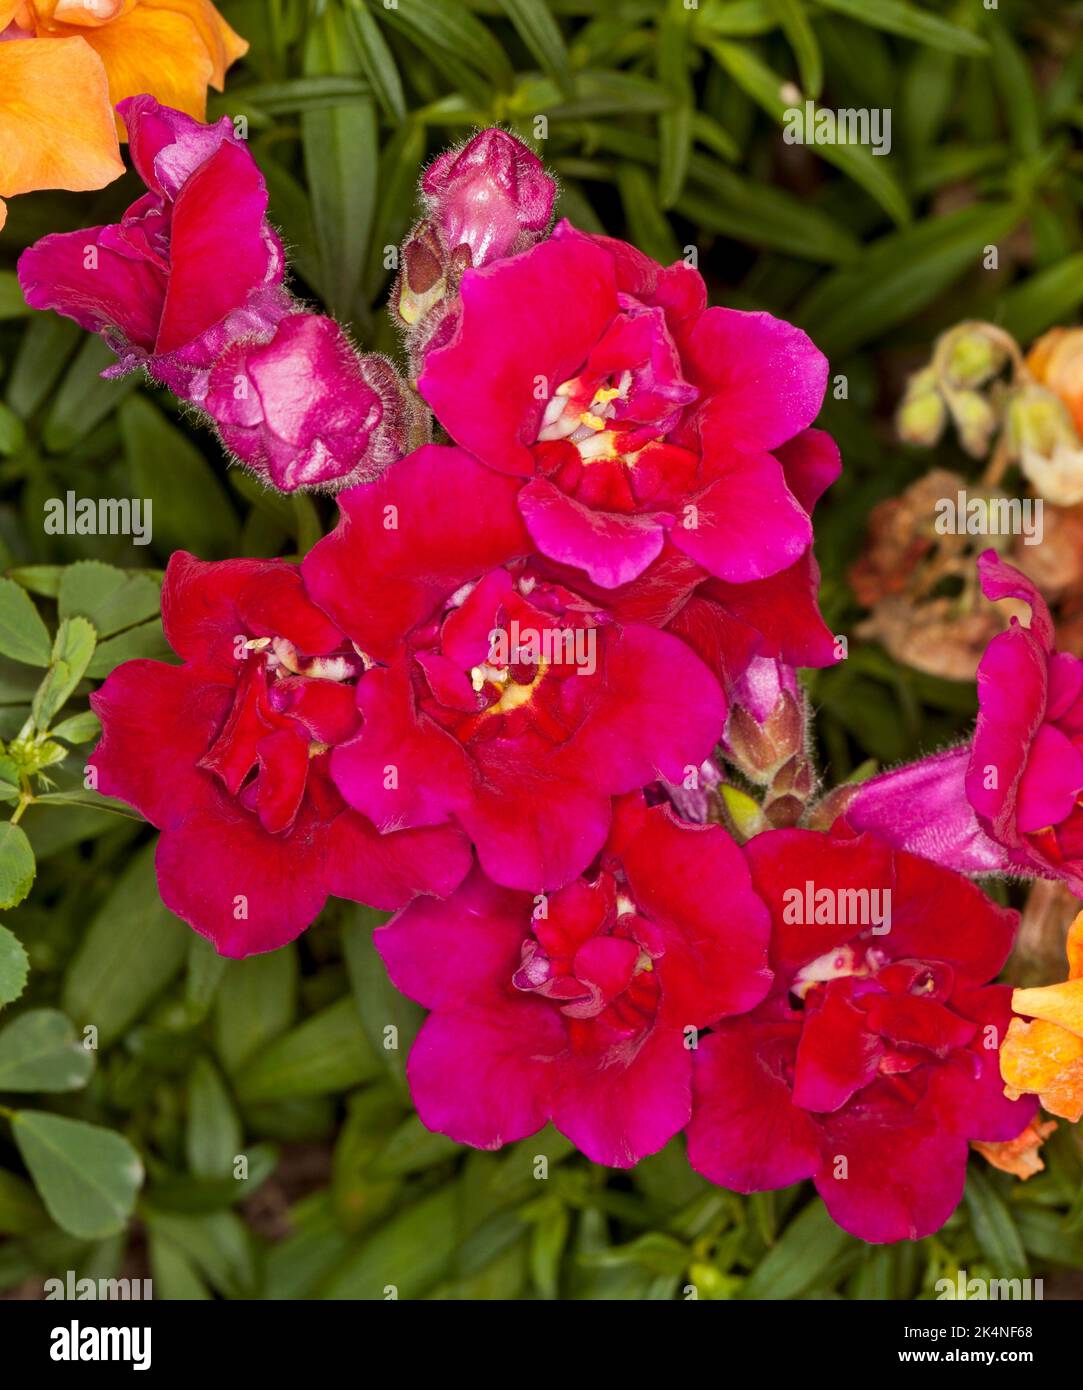 Antirrhinum 'Tetra mix' perfumed flowers Stock Photo